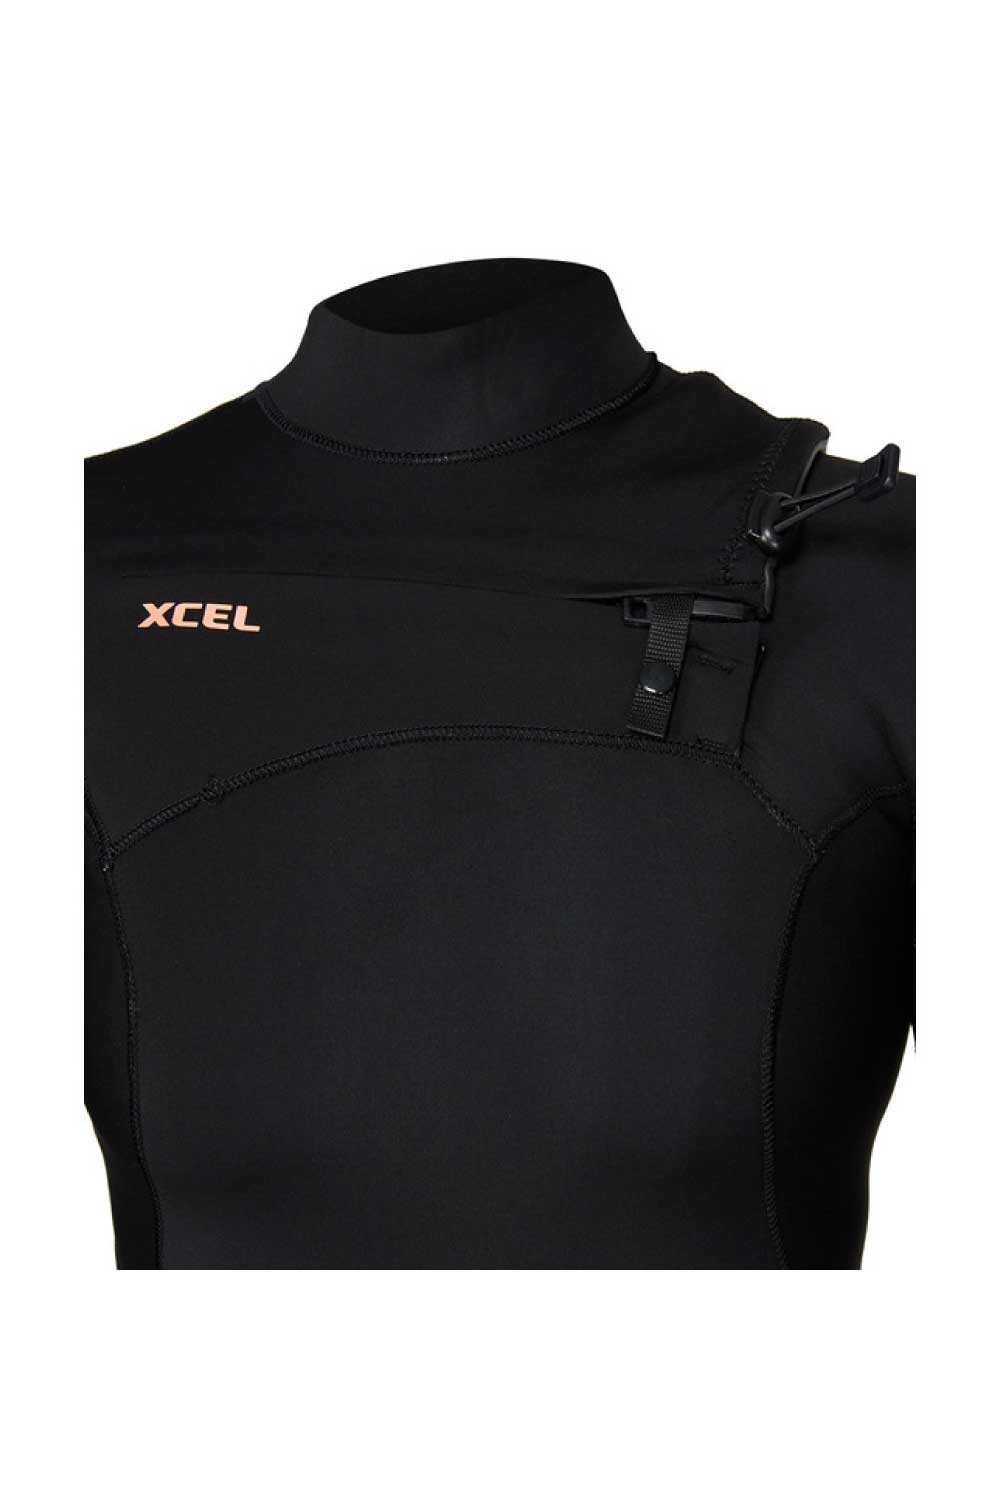 XCEL Womens Comp 3/2 Chest Zip Fullsuit